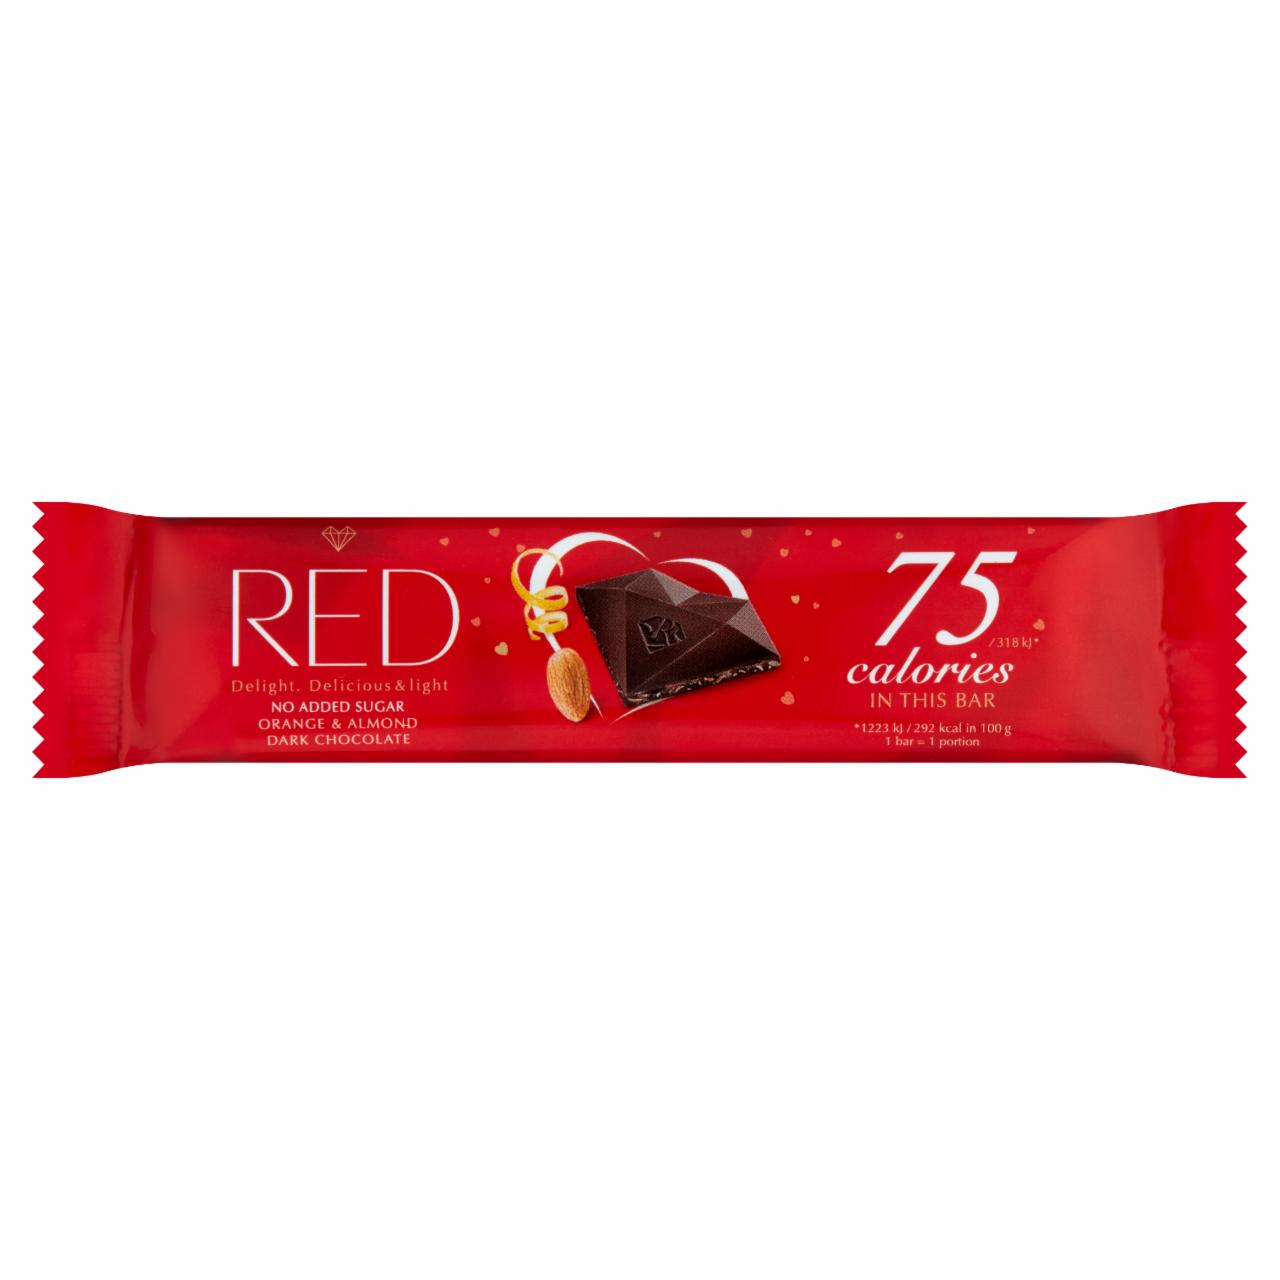 Photo - Red Delight Orange & almond Dark Chocolate with No Added Sugar 26 g